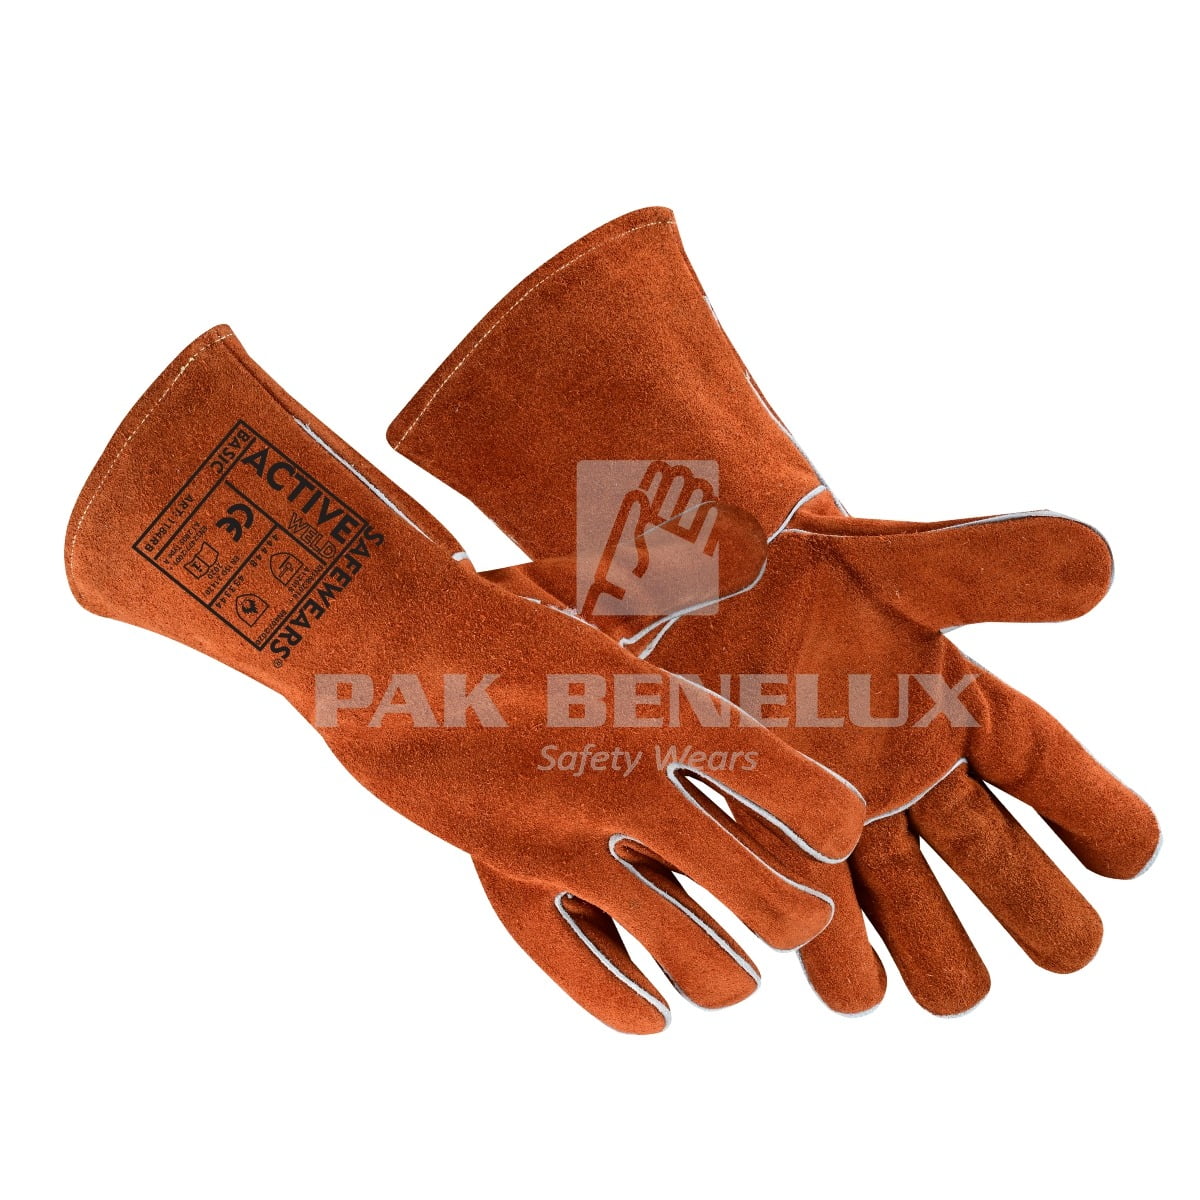 Welding Gloves Manufacturer in Pakistan